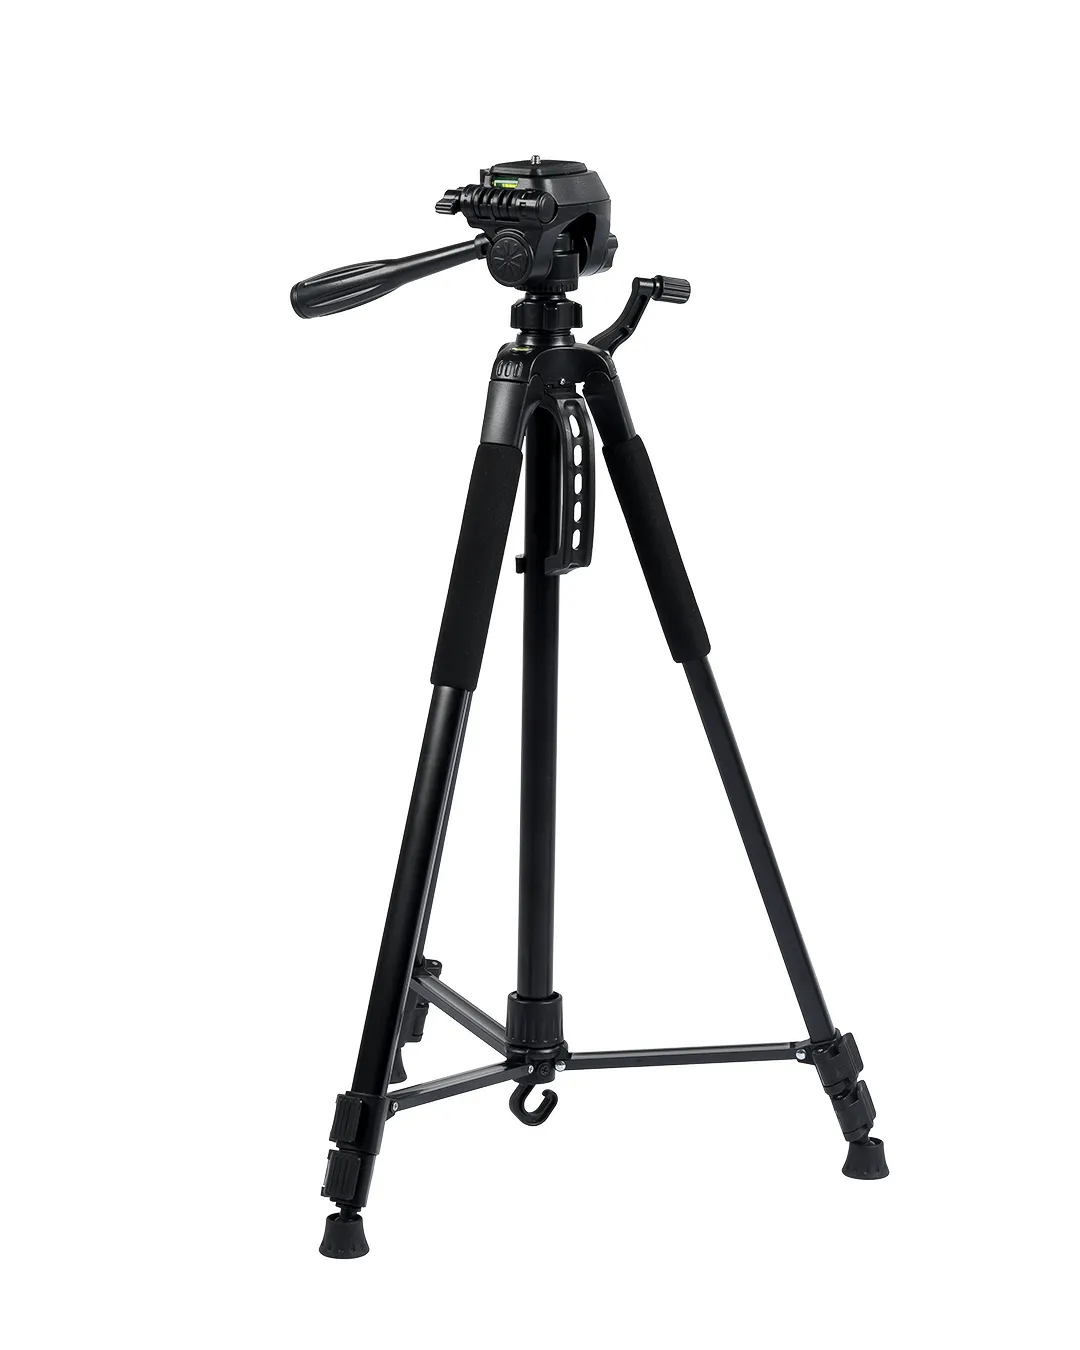 AX-WU-TP360 AriesX EasyX Pro Camera and Phone Tripod Stand